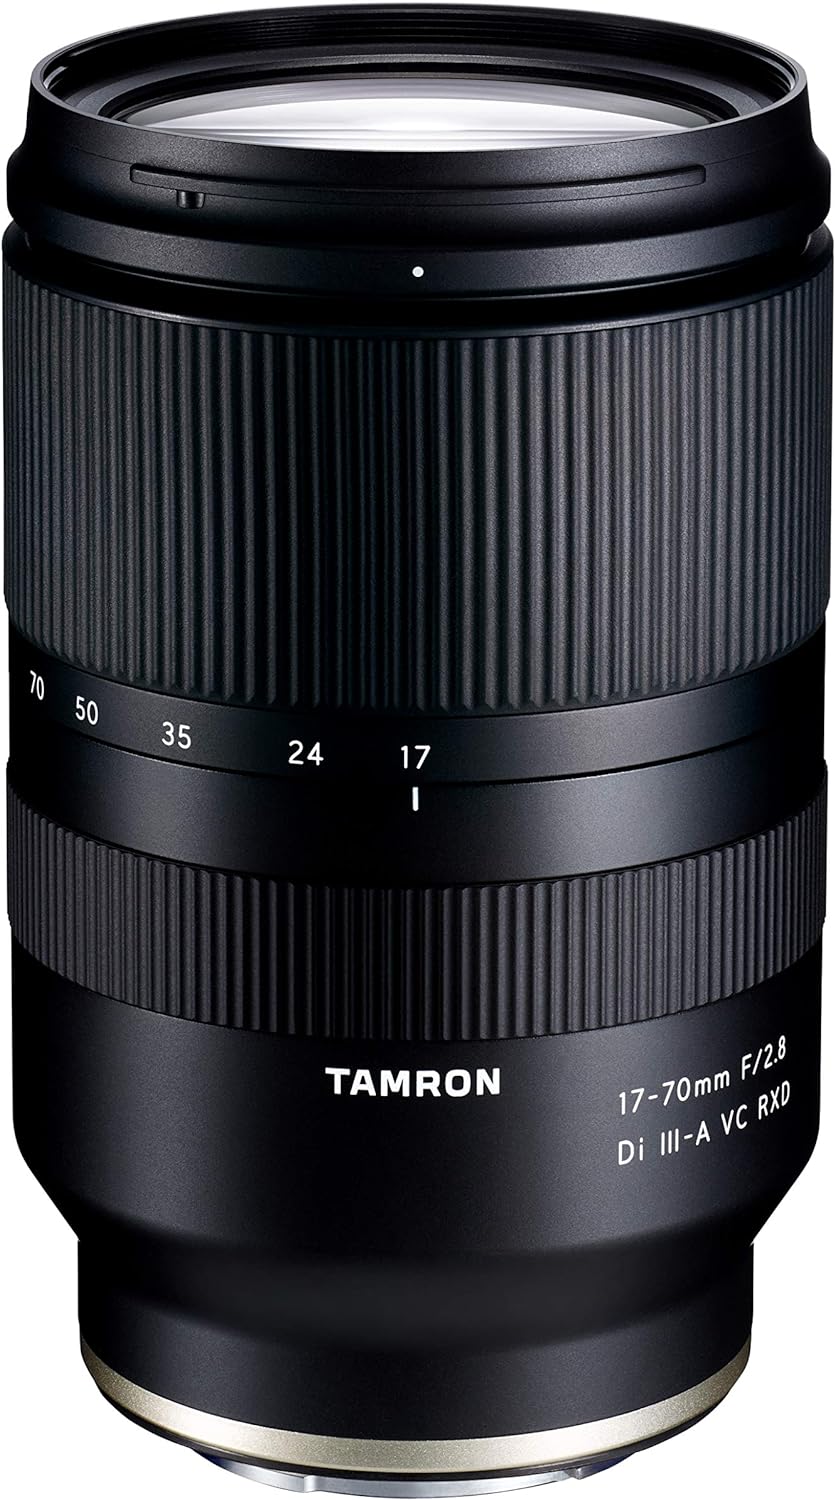 Tamron 17-70mm F/2.8 Di III-A RXD for APS-C Fujifilm Mirrorless Cameras